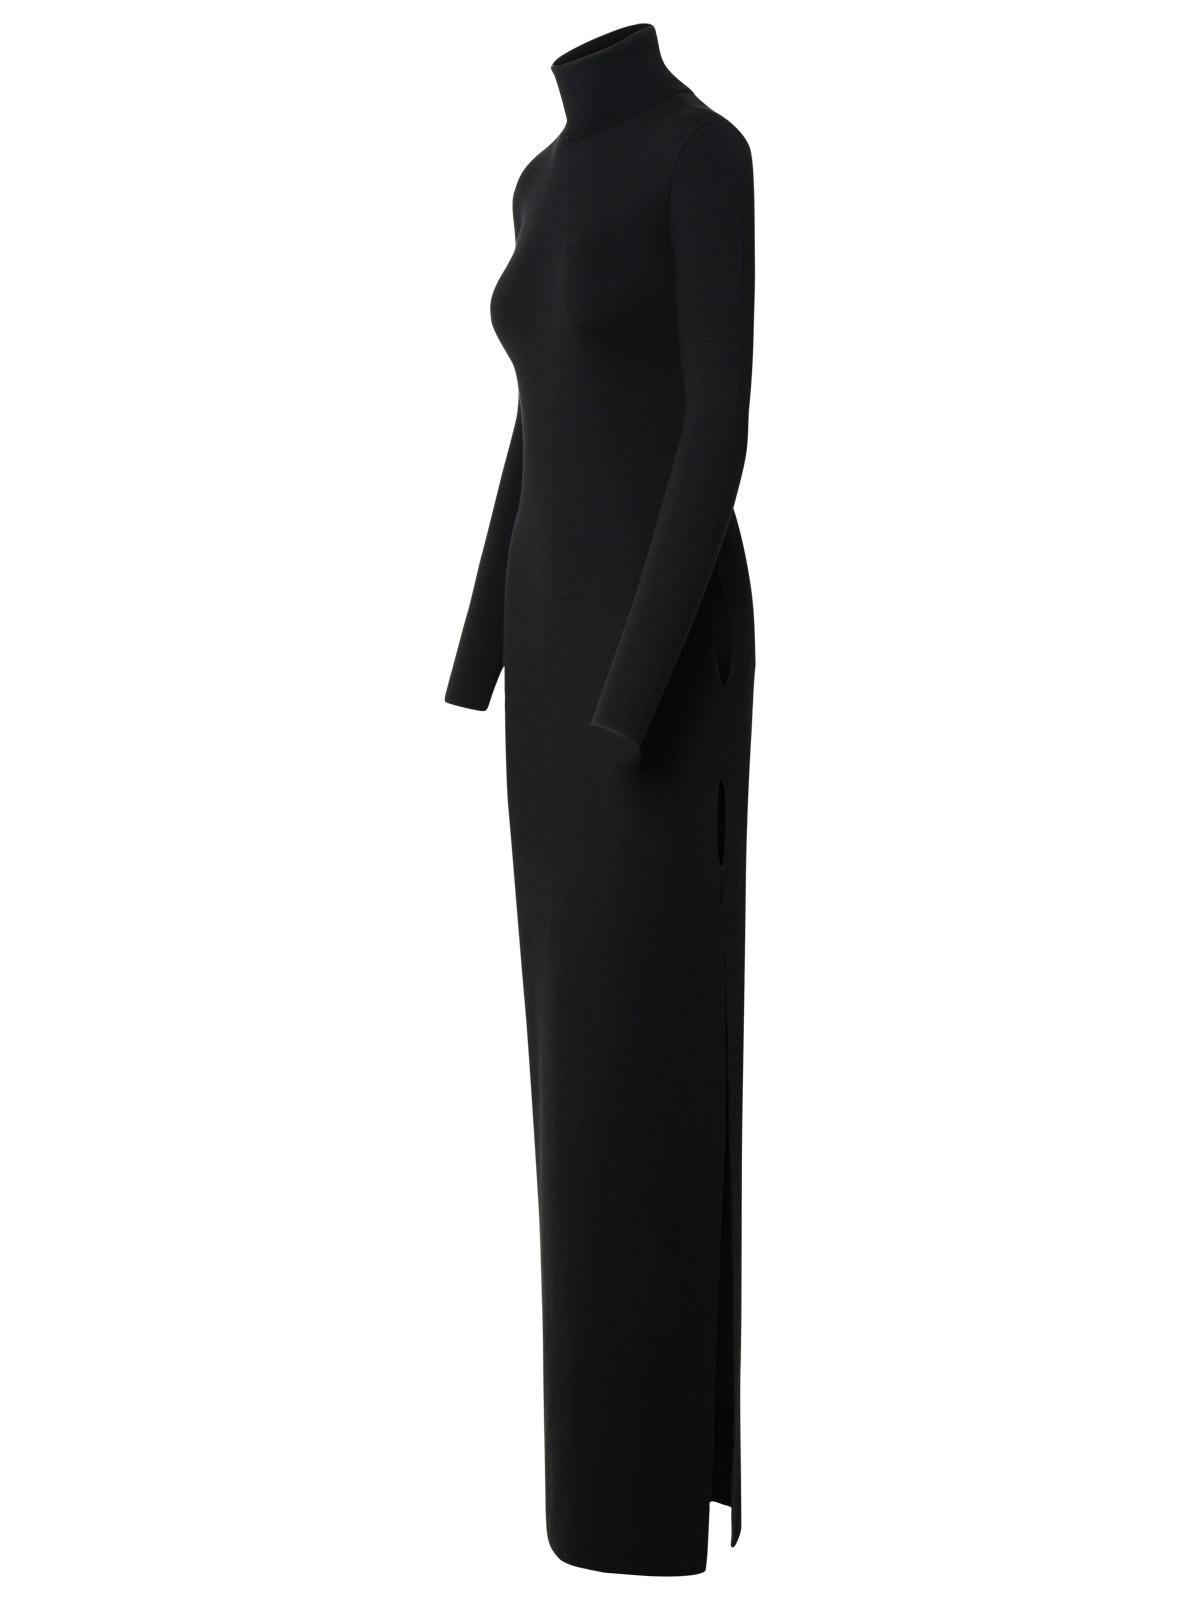 Saint Laurent Black Virgin Wool Dress - 2